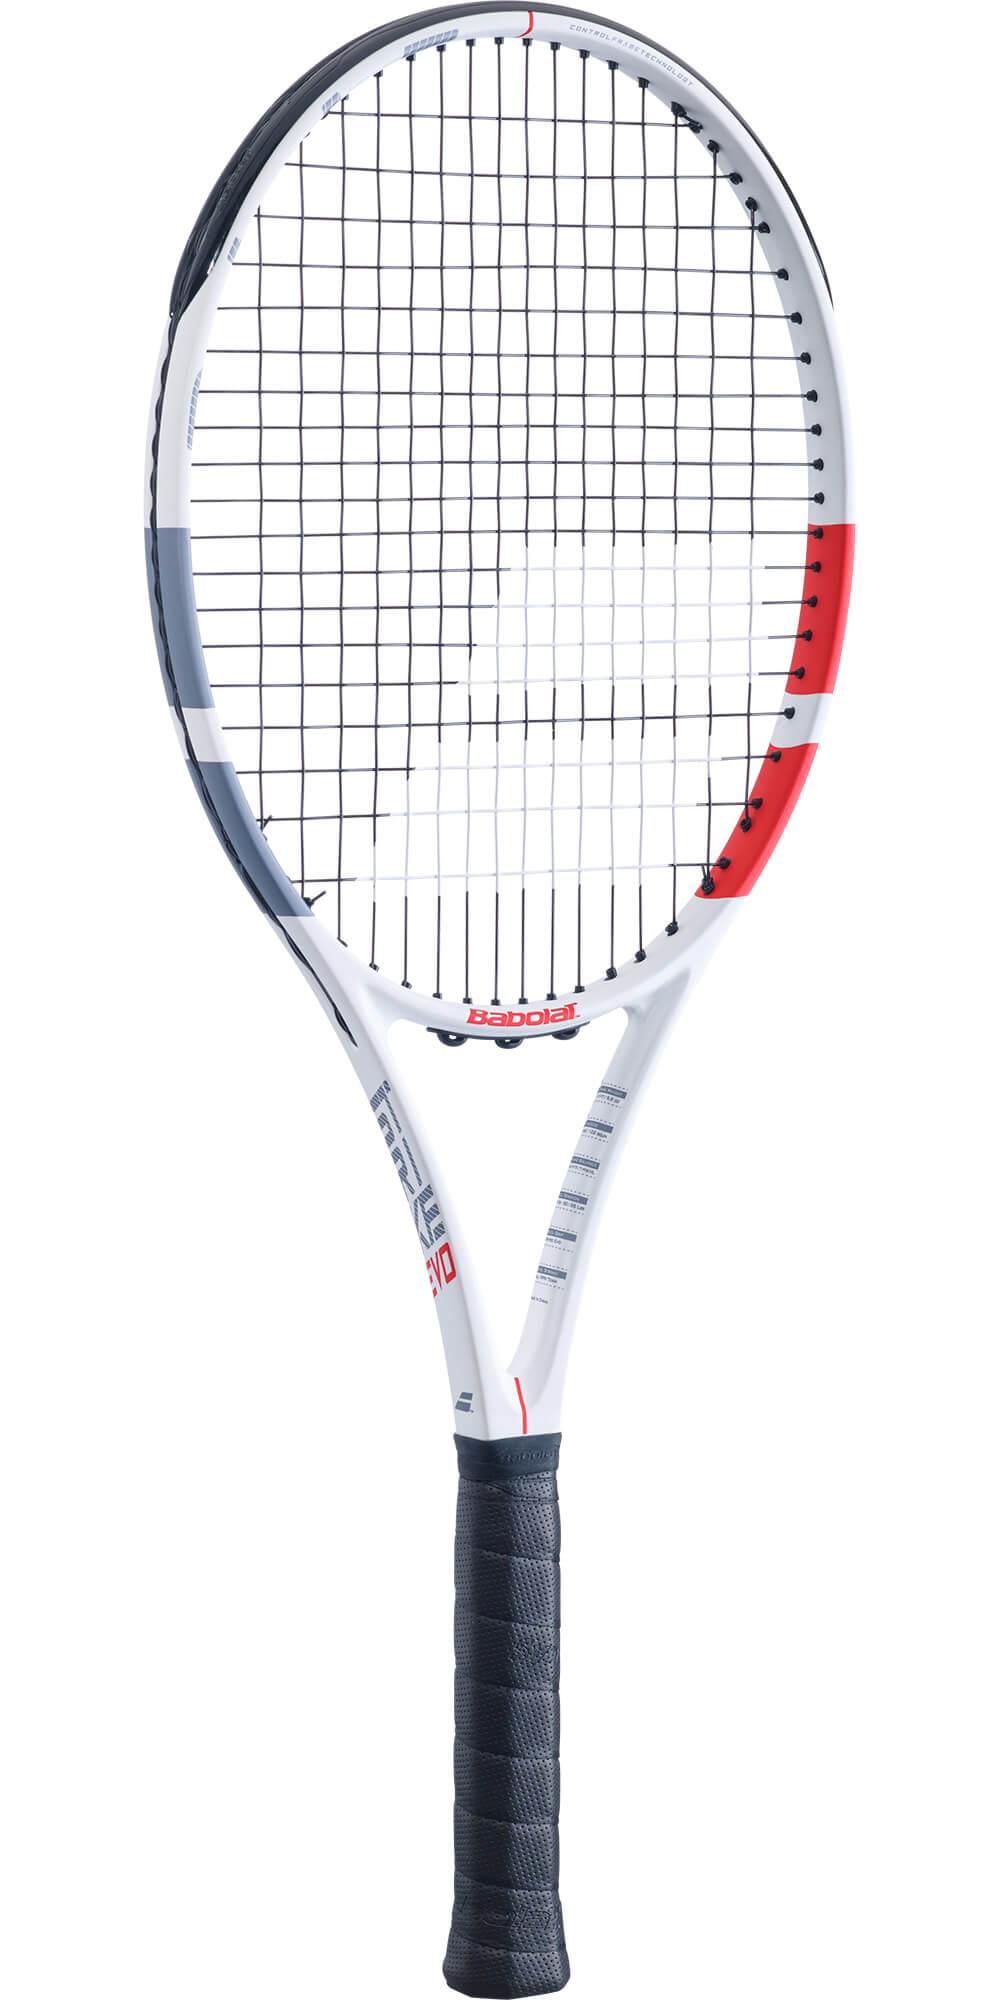 Babolat Strike Evo Tennis Racket - Tennisnuts.com